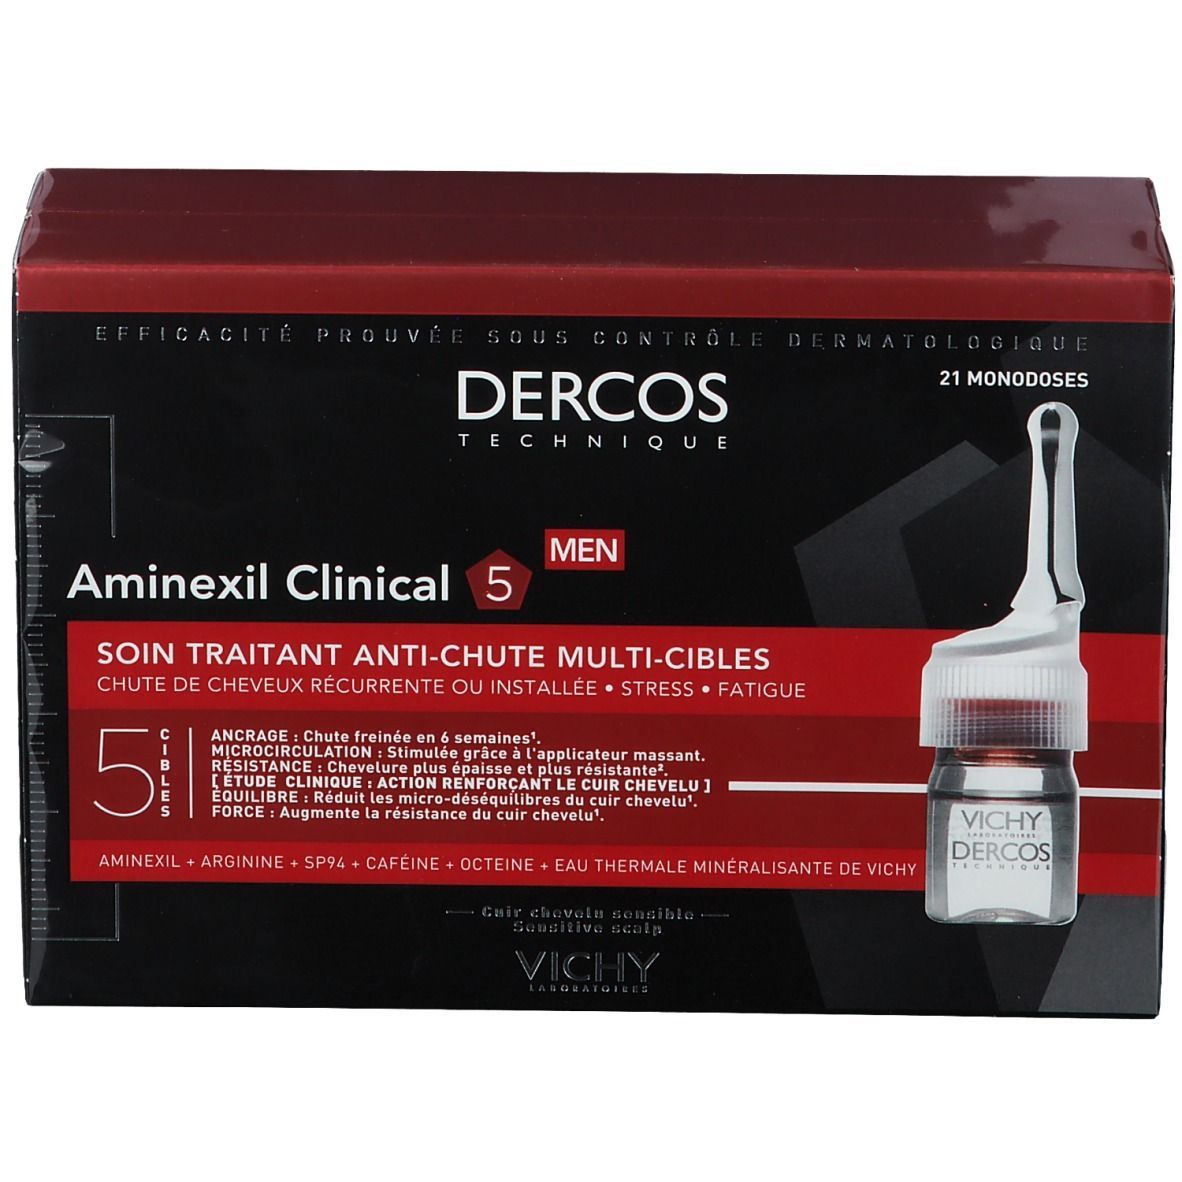 VICHY Dercos Aminexil Clinical 5